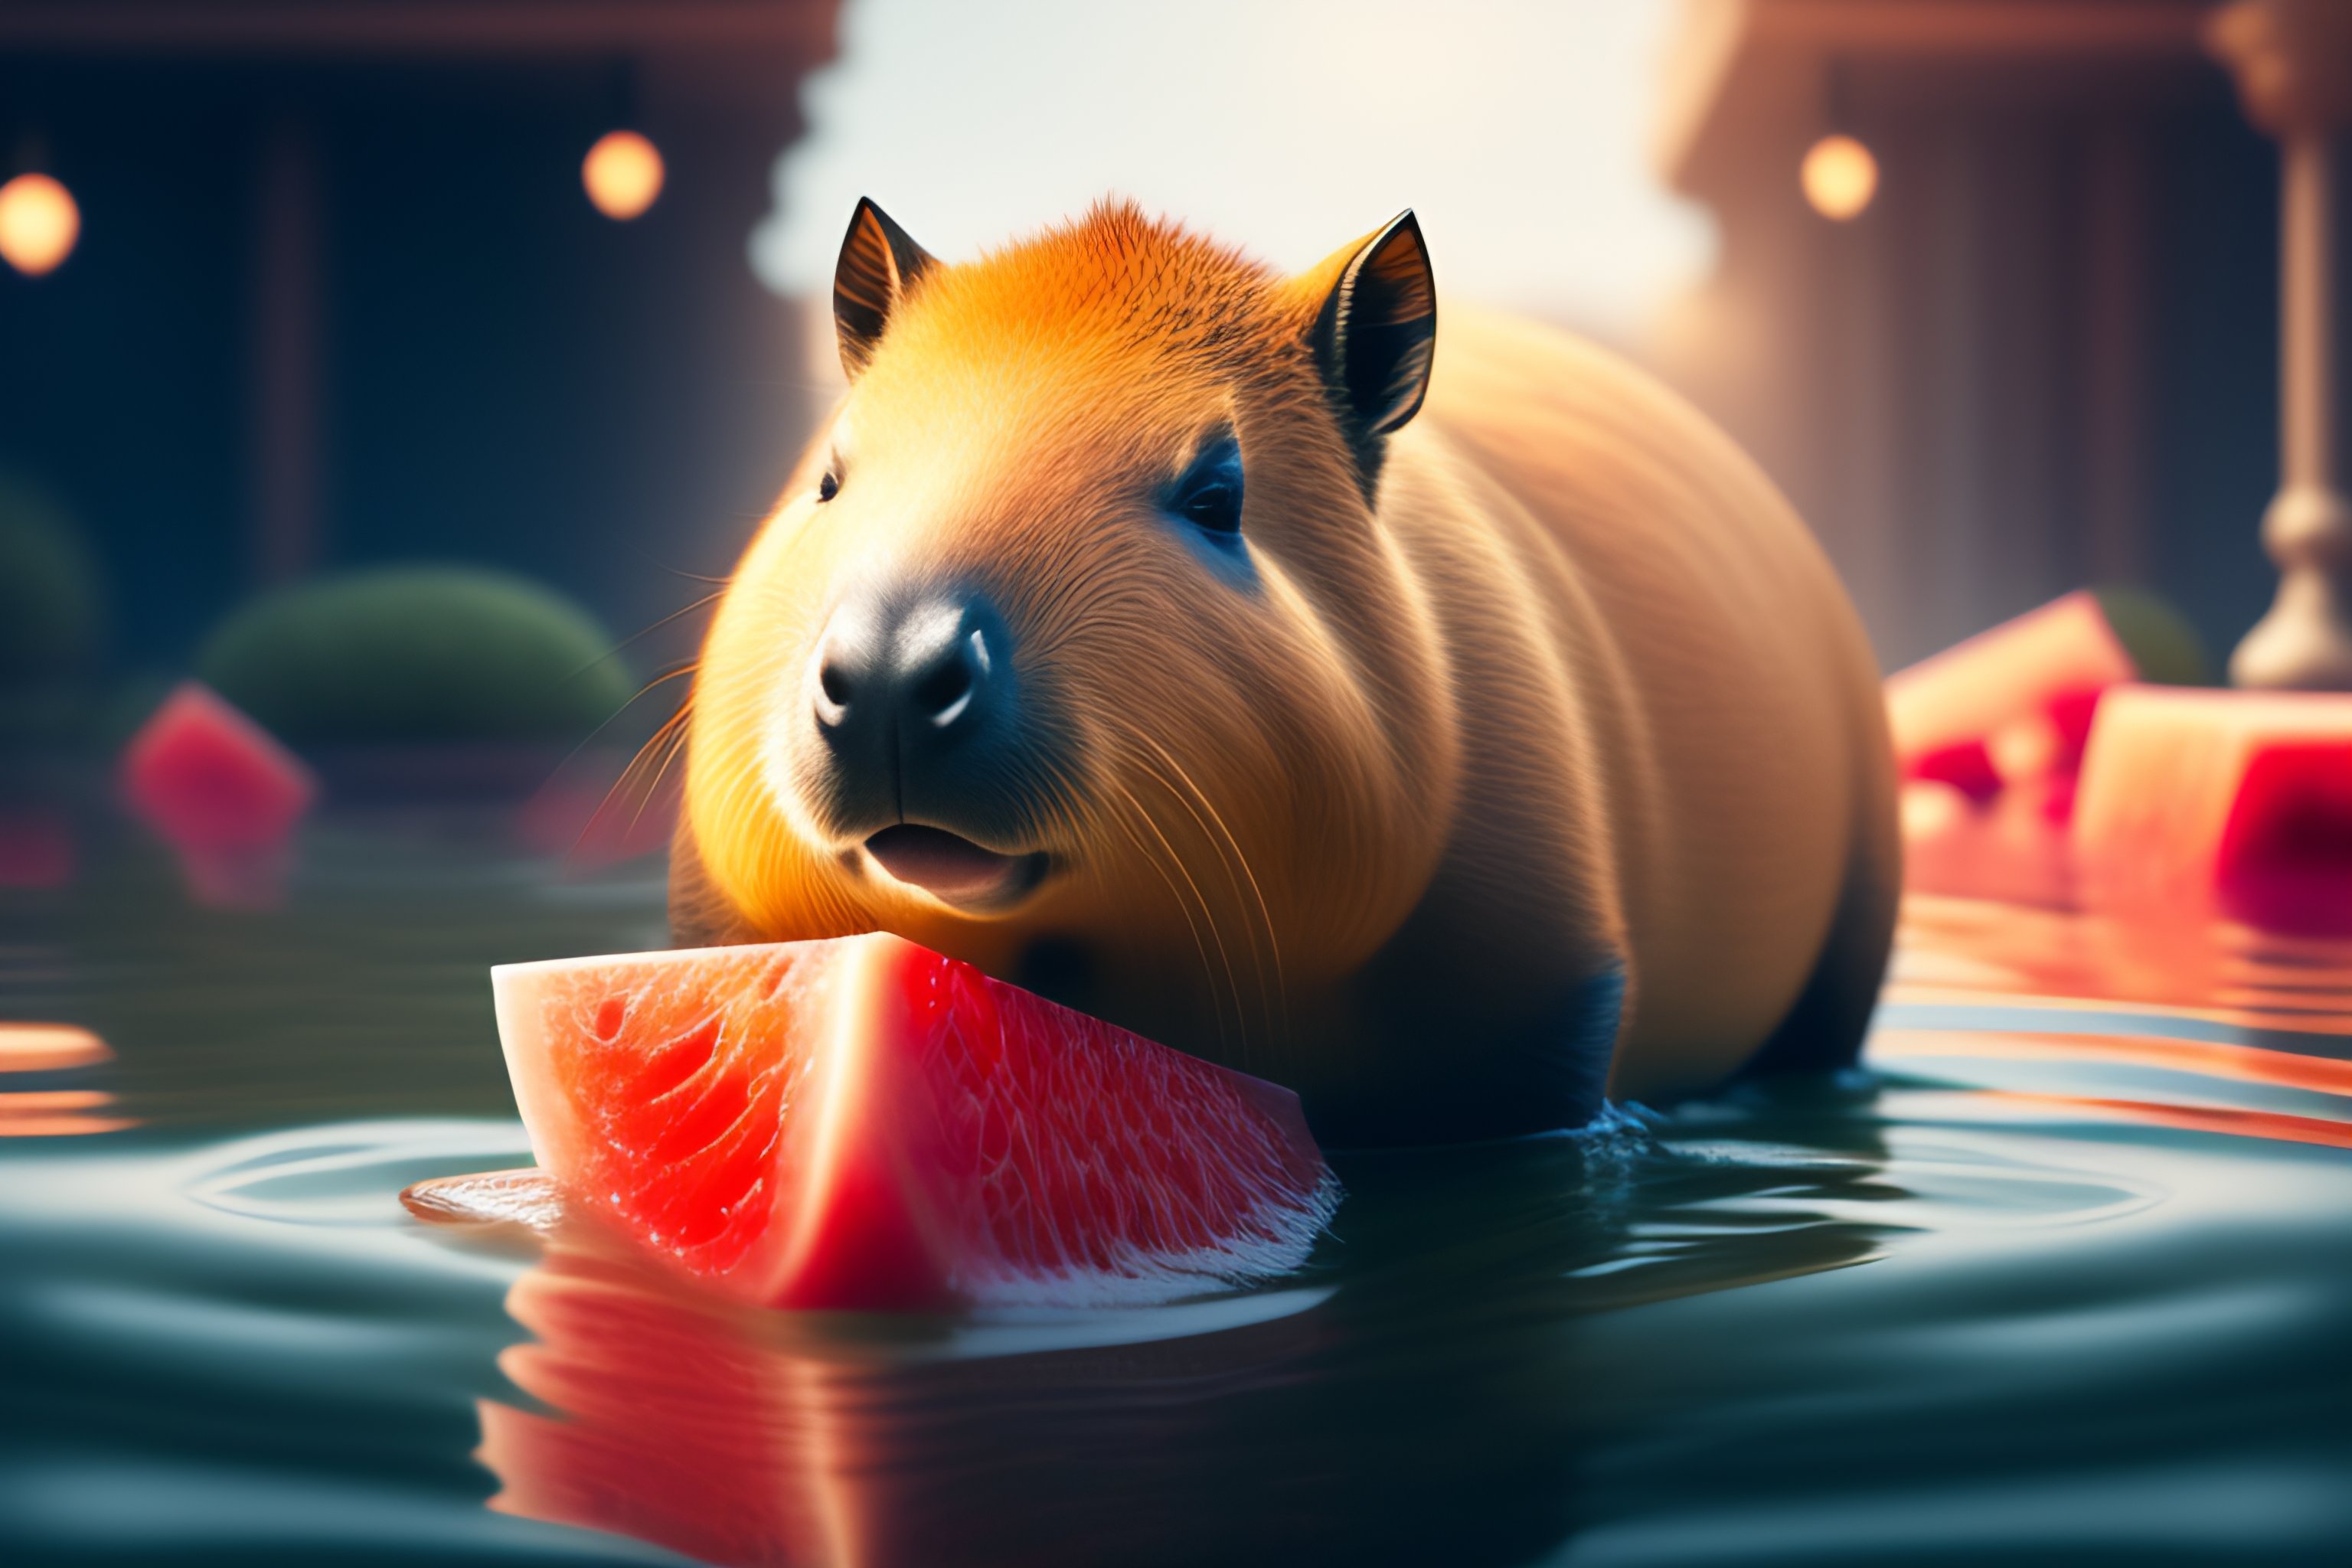 Capybara and watermelon.